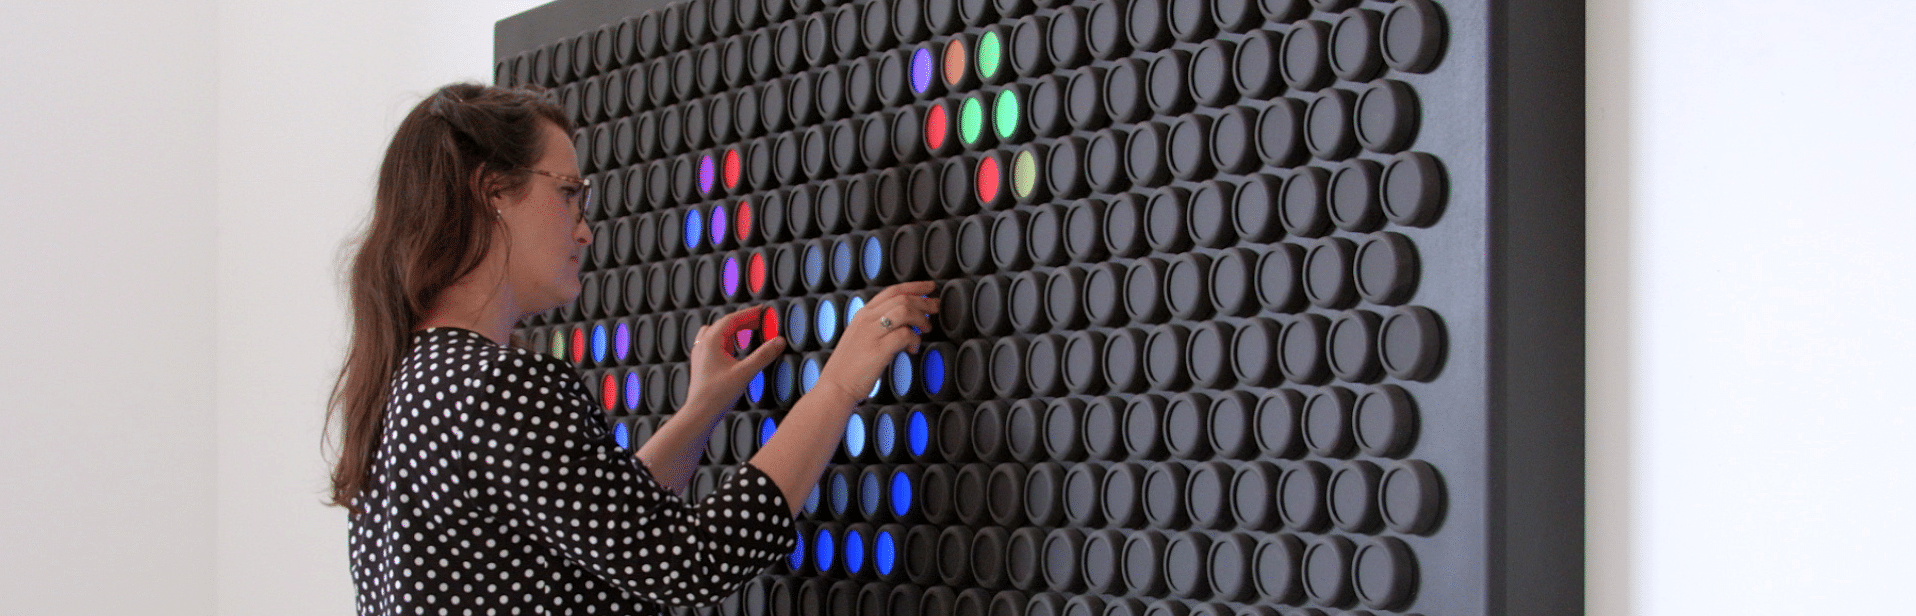 Everbright Giant Lite Light Brite Bright Interactive Wall Art Light LED Hero Design